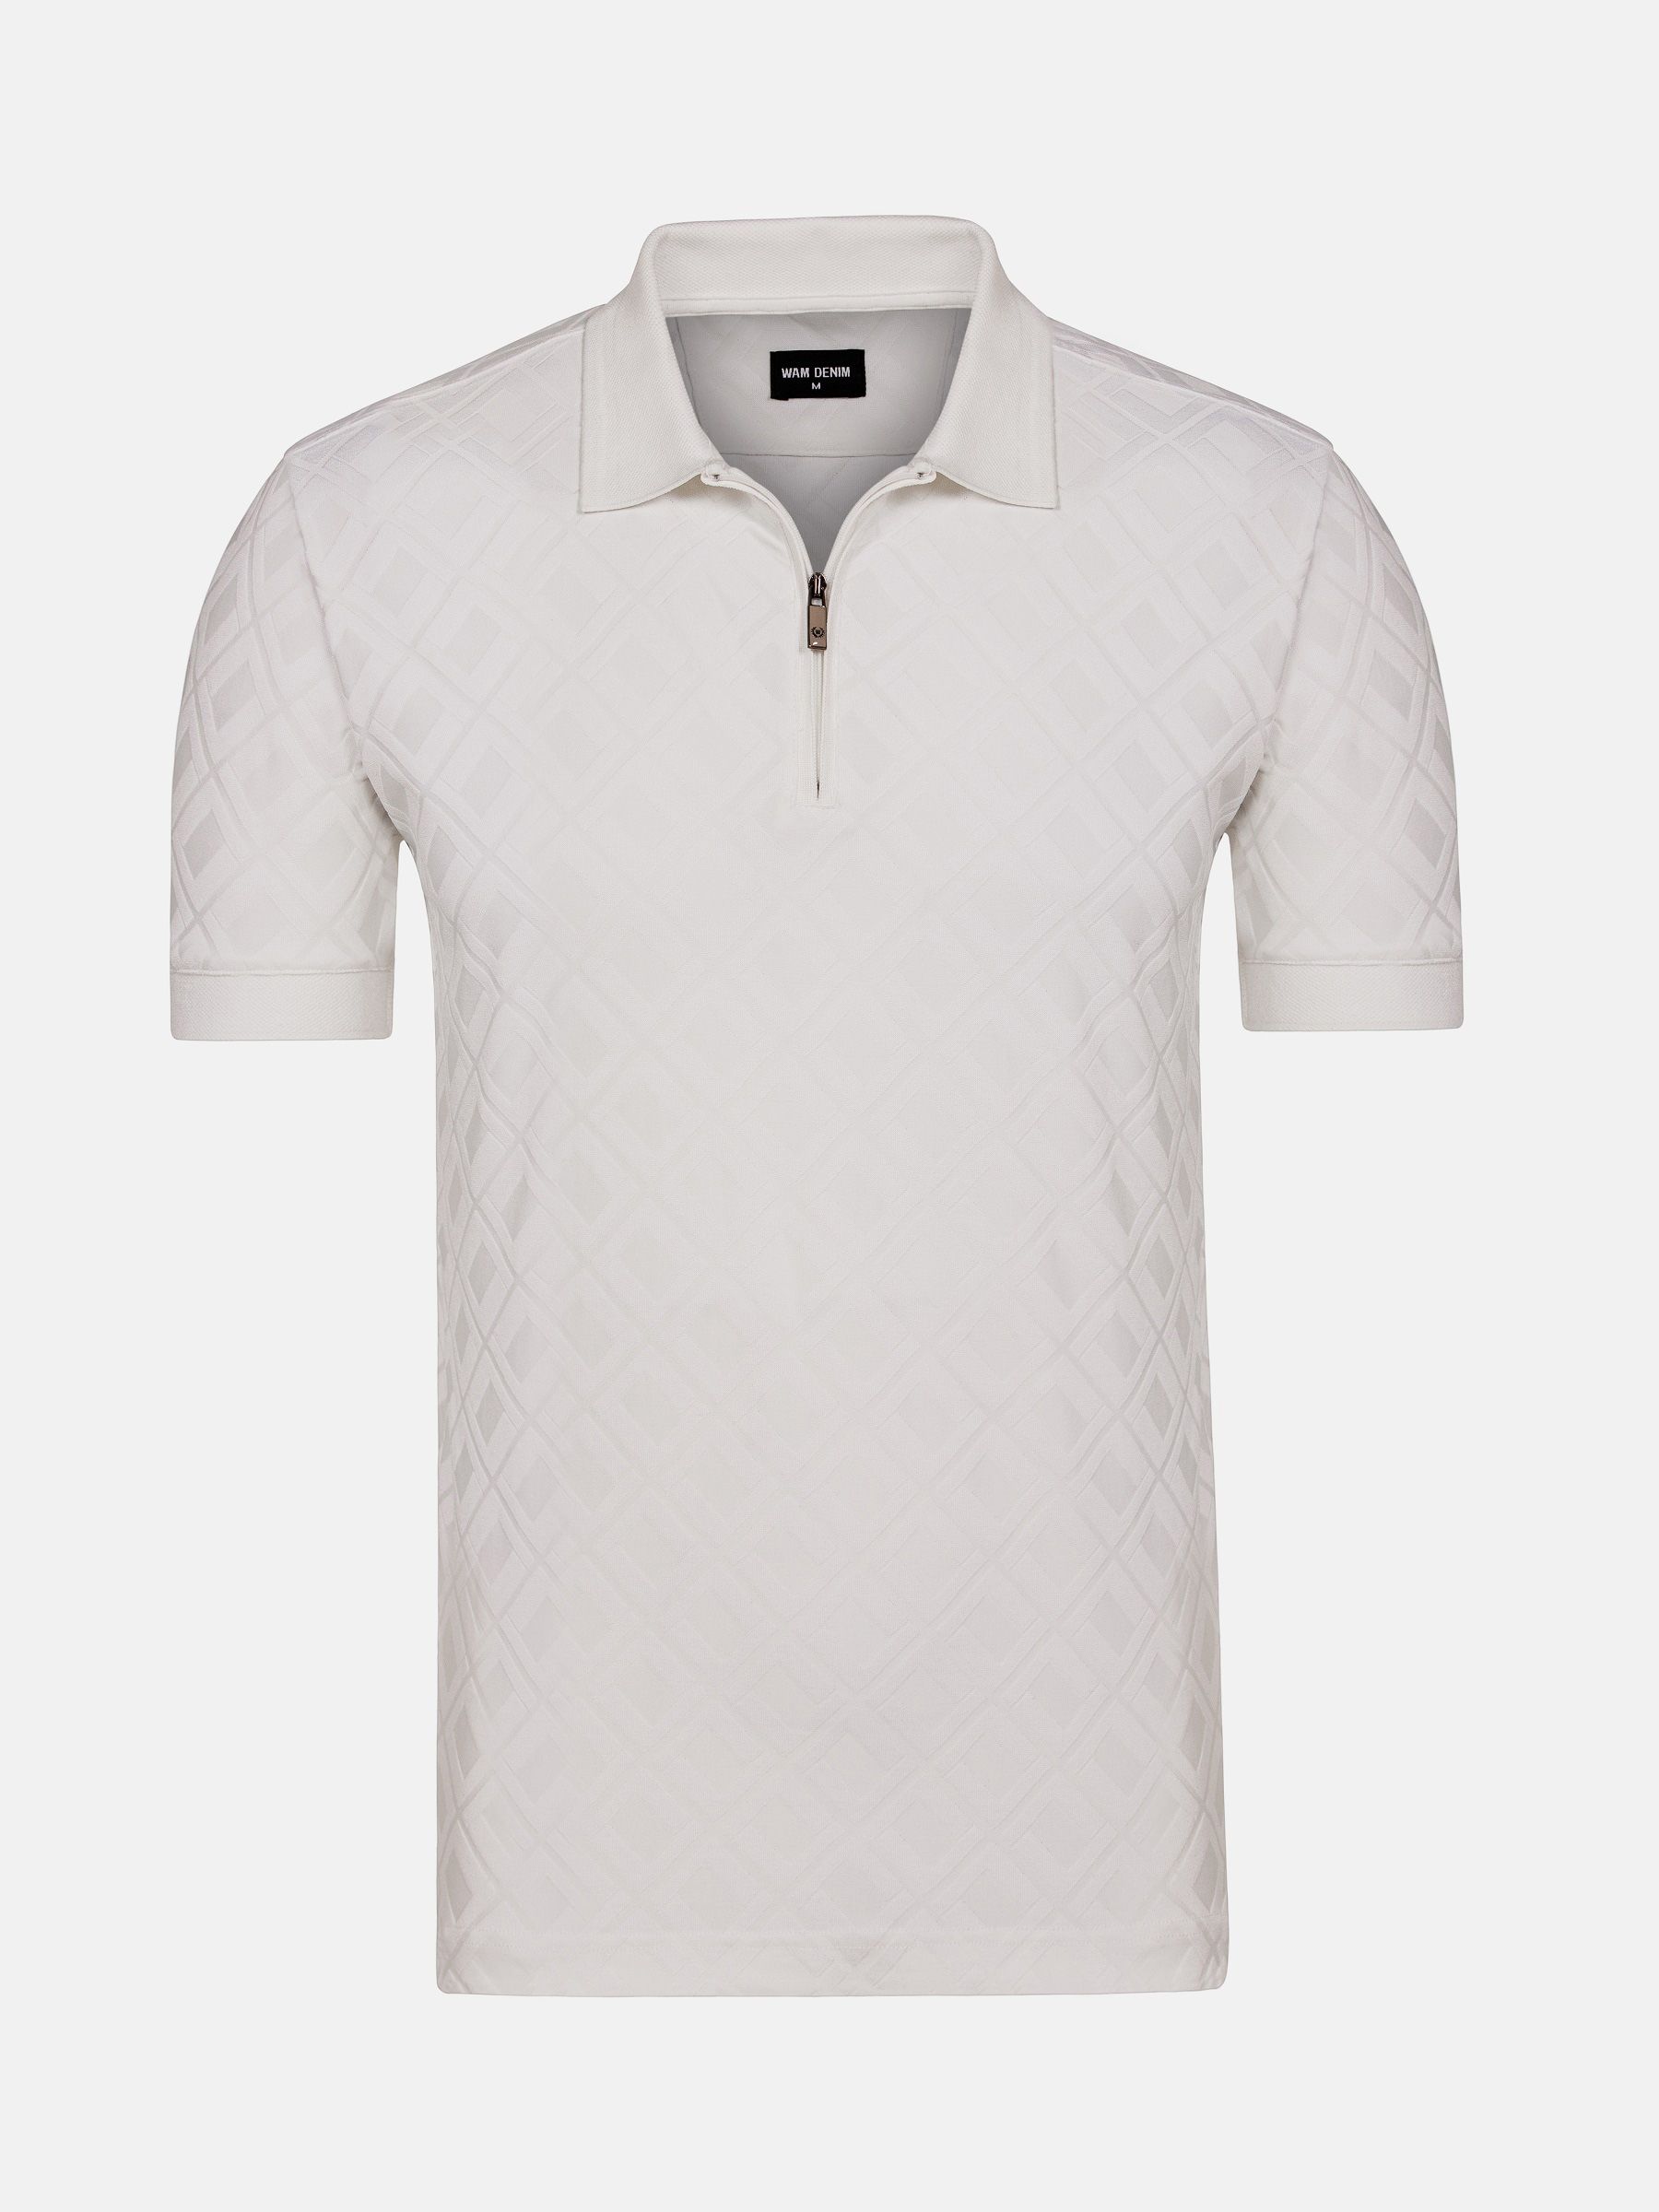 Men's slim fit white zipper polo shirt short sleeve- Discover the Best Zipper  Polo Shirts for Men| W